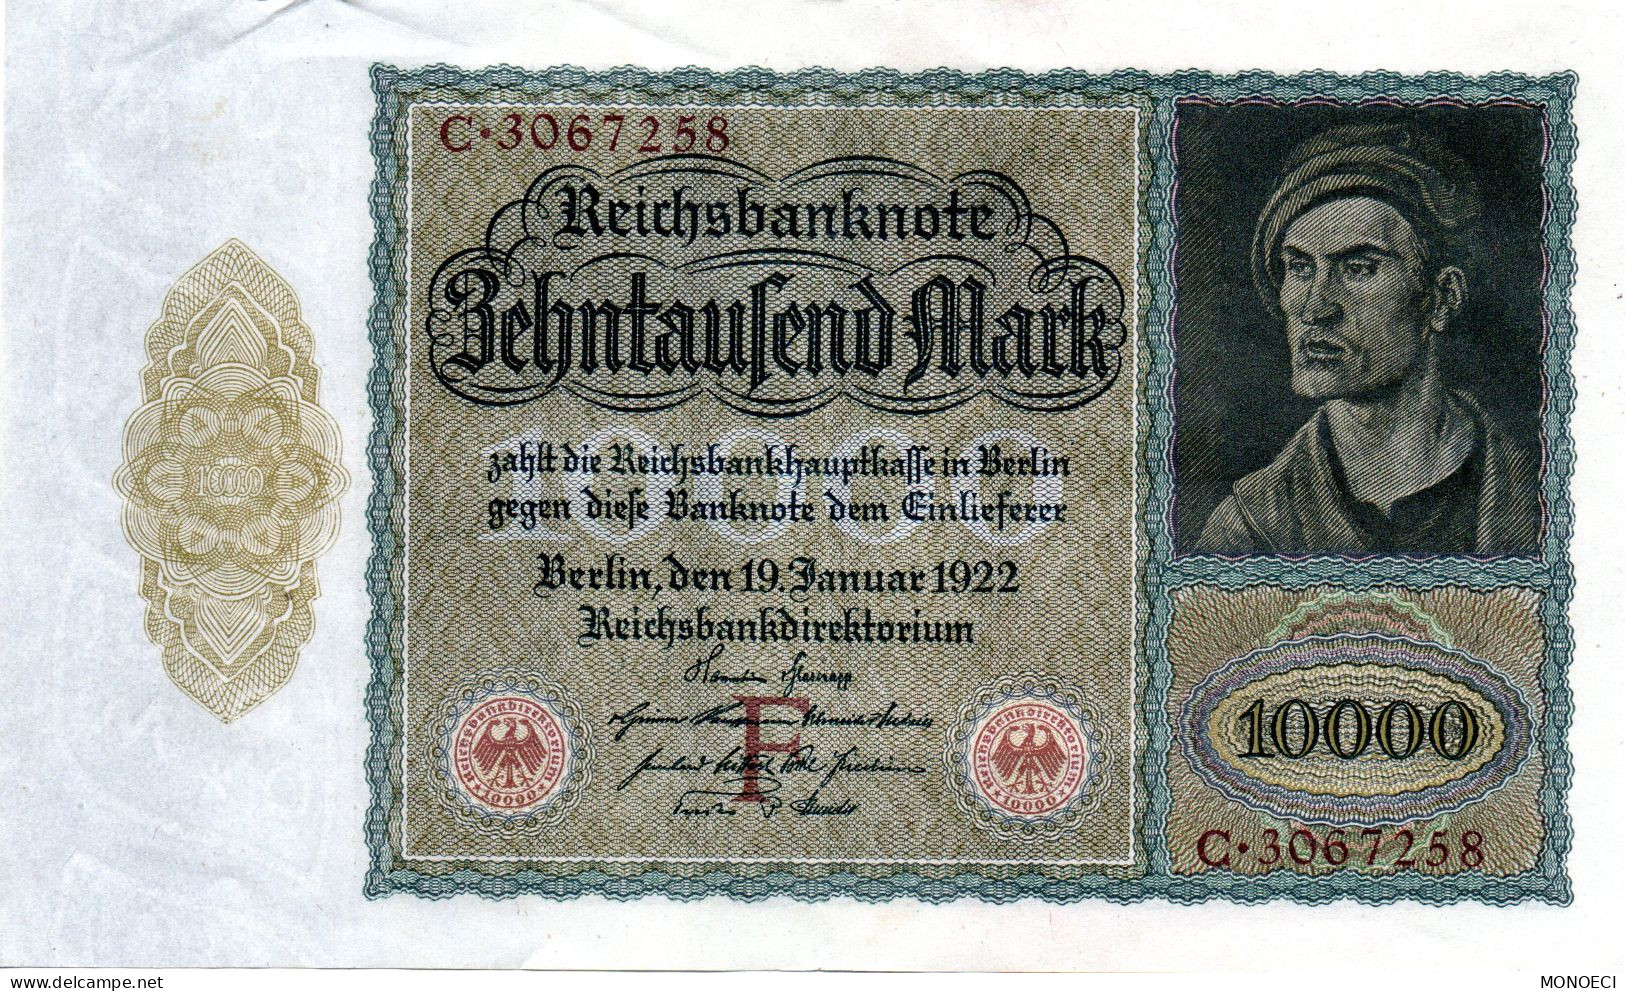 ALLEMAGNE -- Reichsbanknote -- 10.000 Mark Berlin, Den 19 Januar 1922 - 10.000 Mark